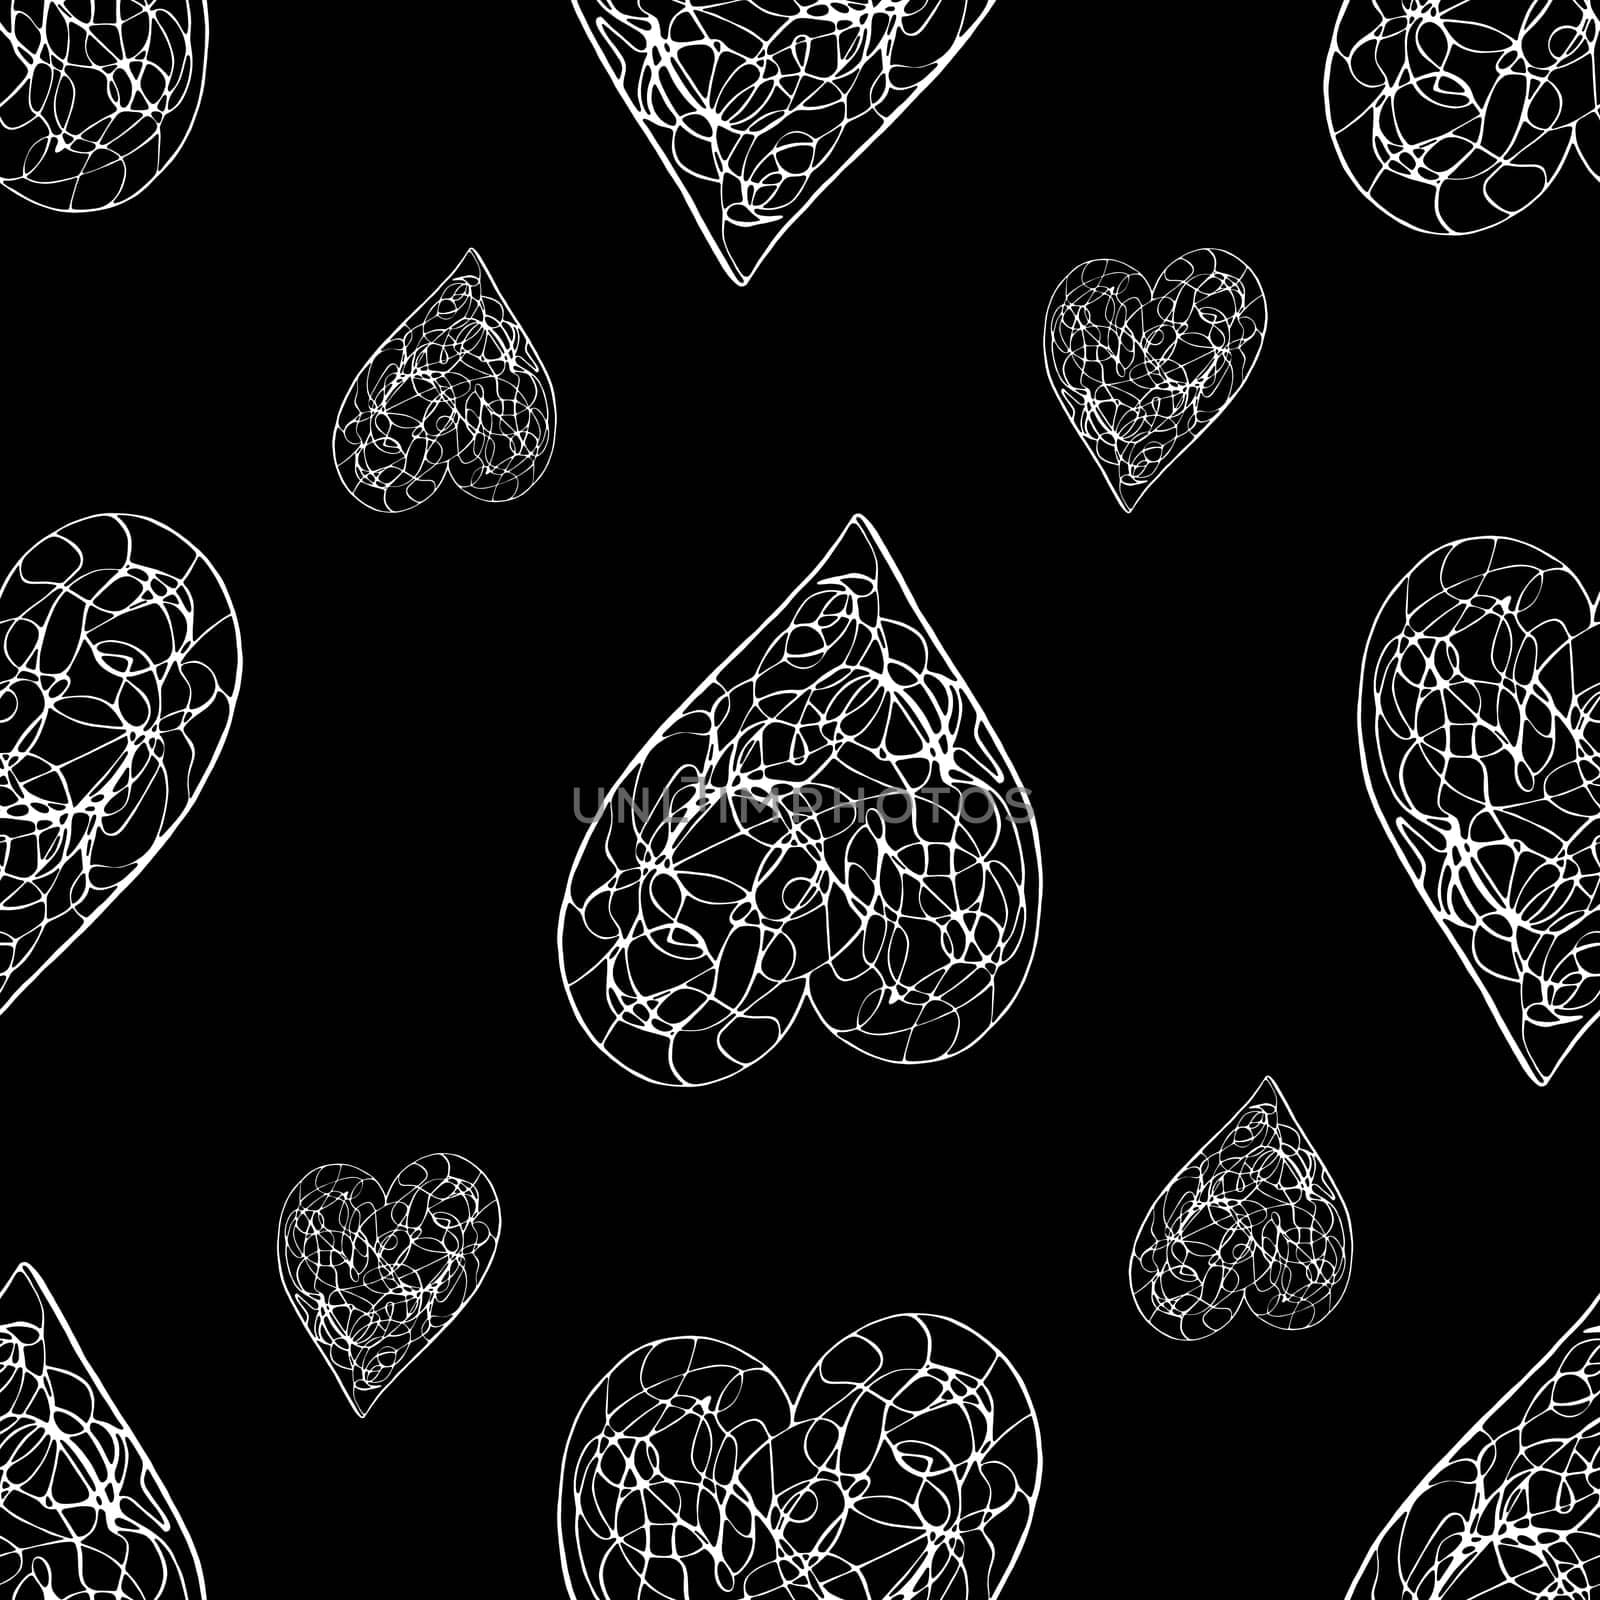 Seamless Pattern with Hearts. Hand Drawn Valentines Background. by Rina_Dozornaya